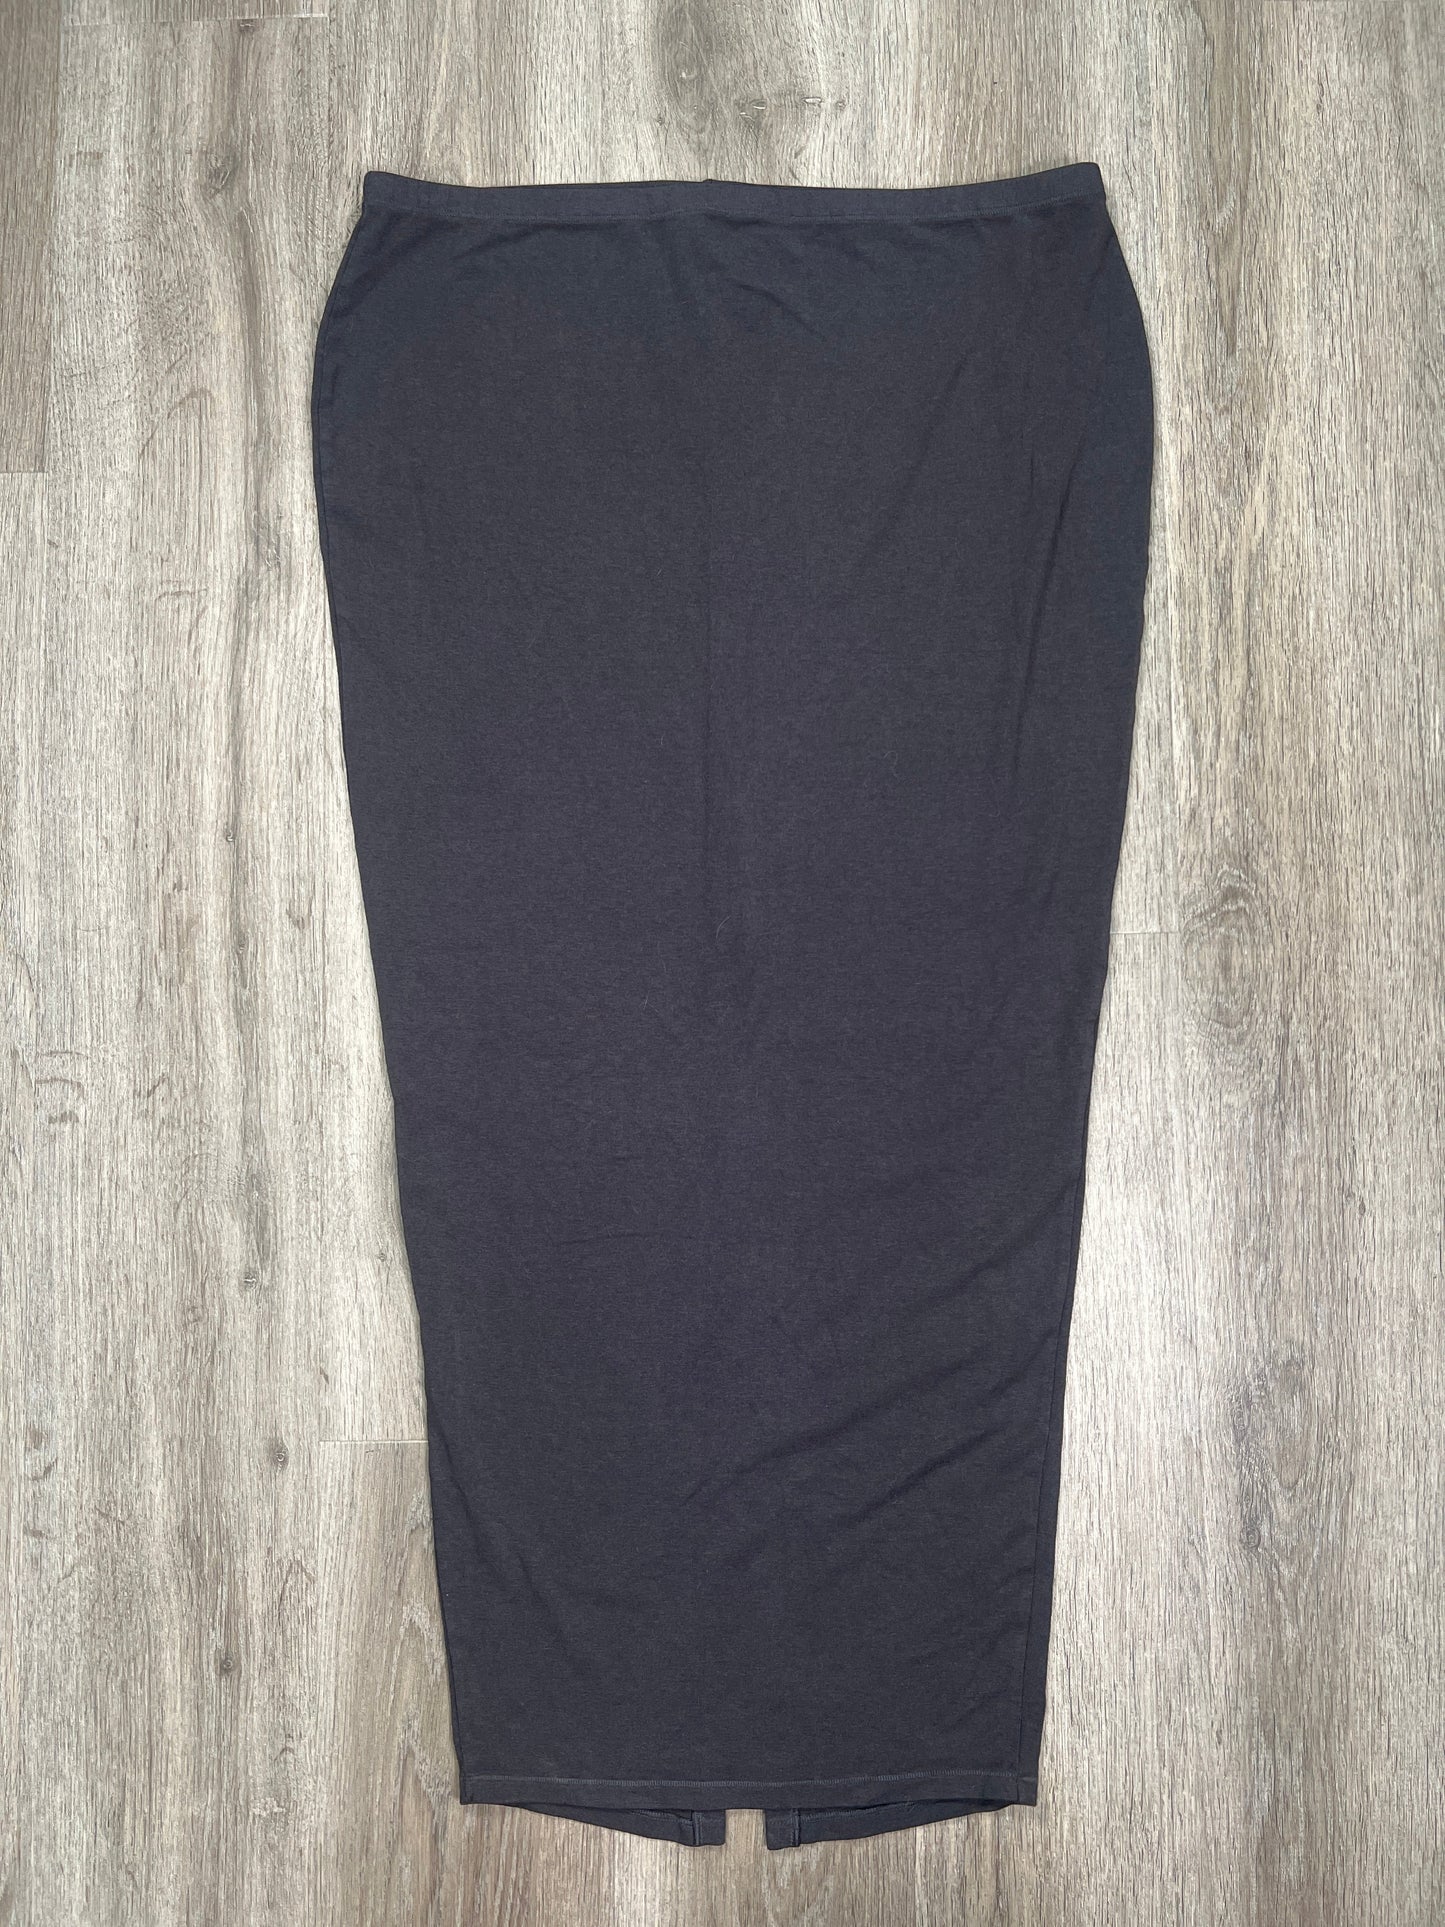 Grey Skirt Maxi Skims, Size 3x